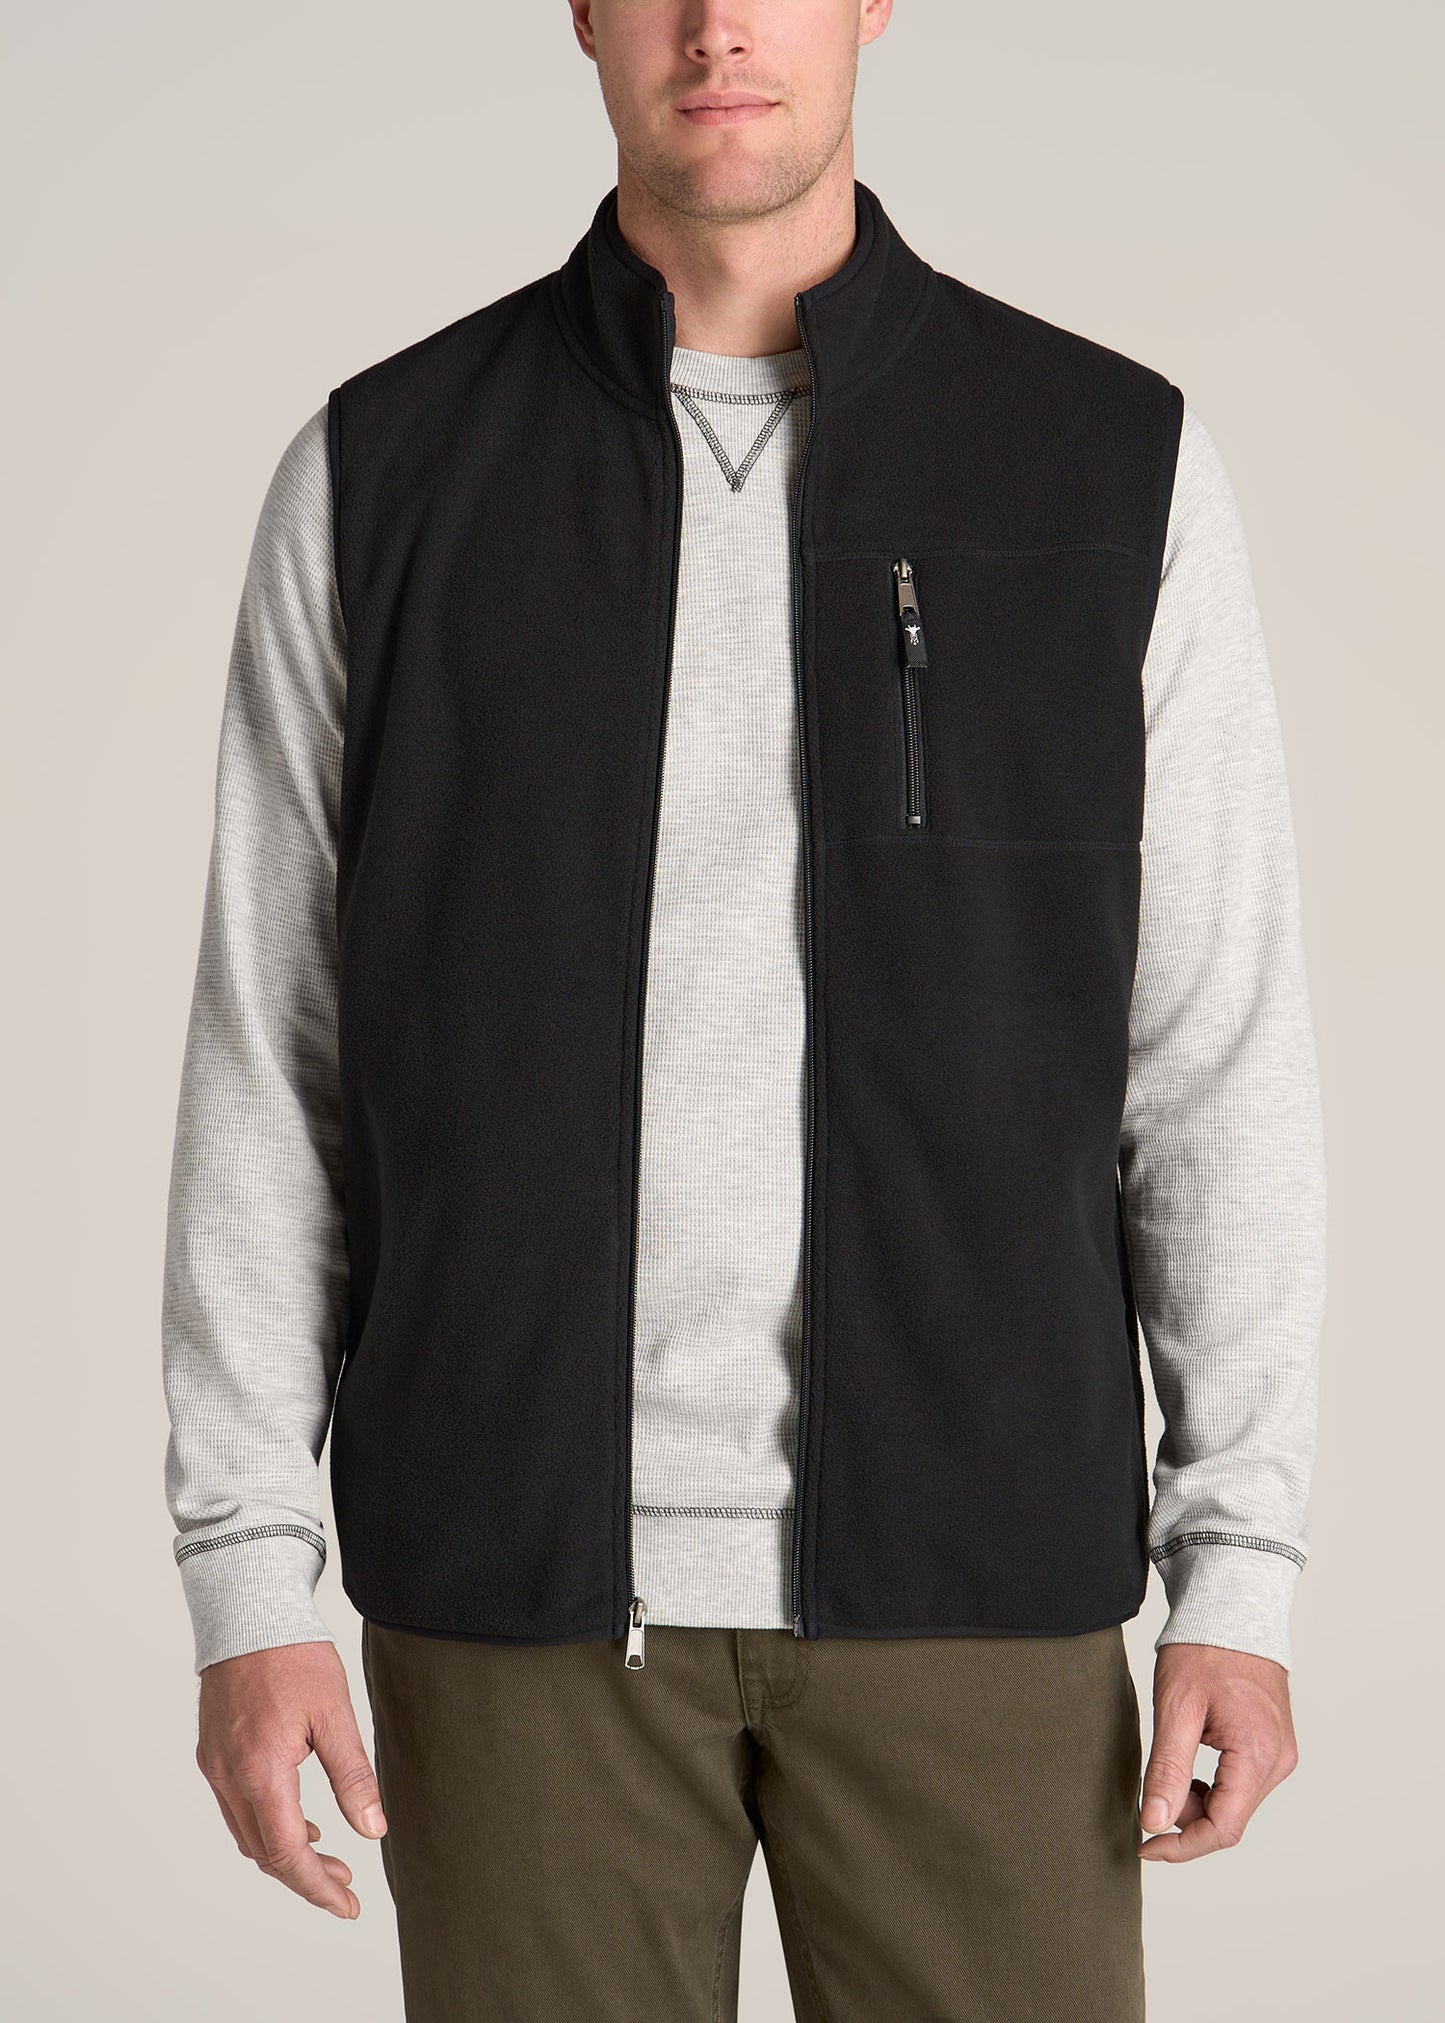 American-Tall-Men-Polar-Fleece-Sweater-Full-Zip-Vest-Black-front